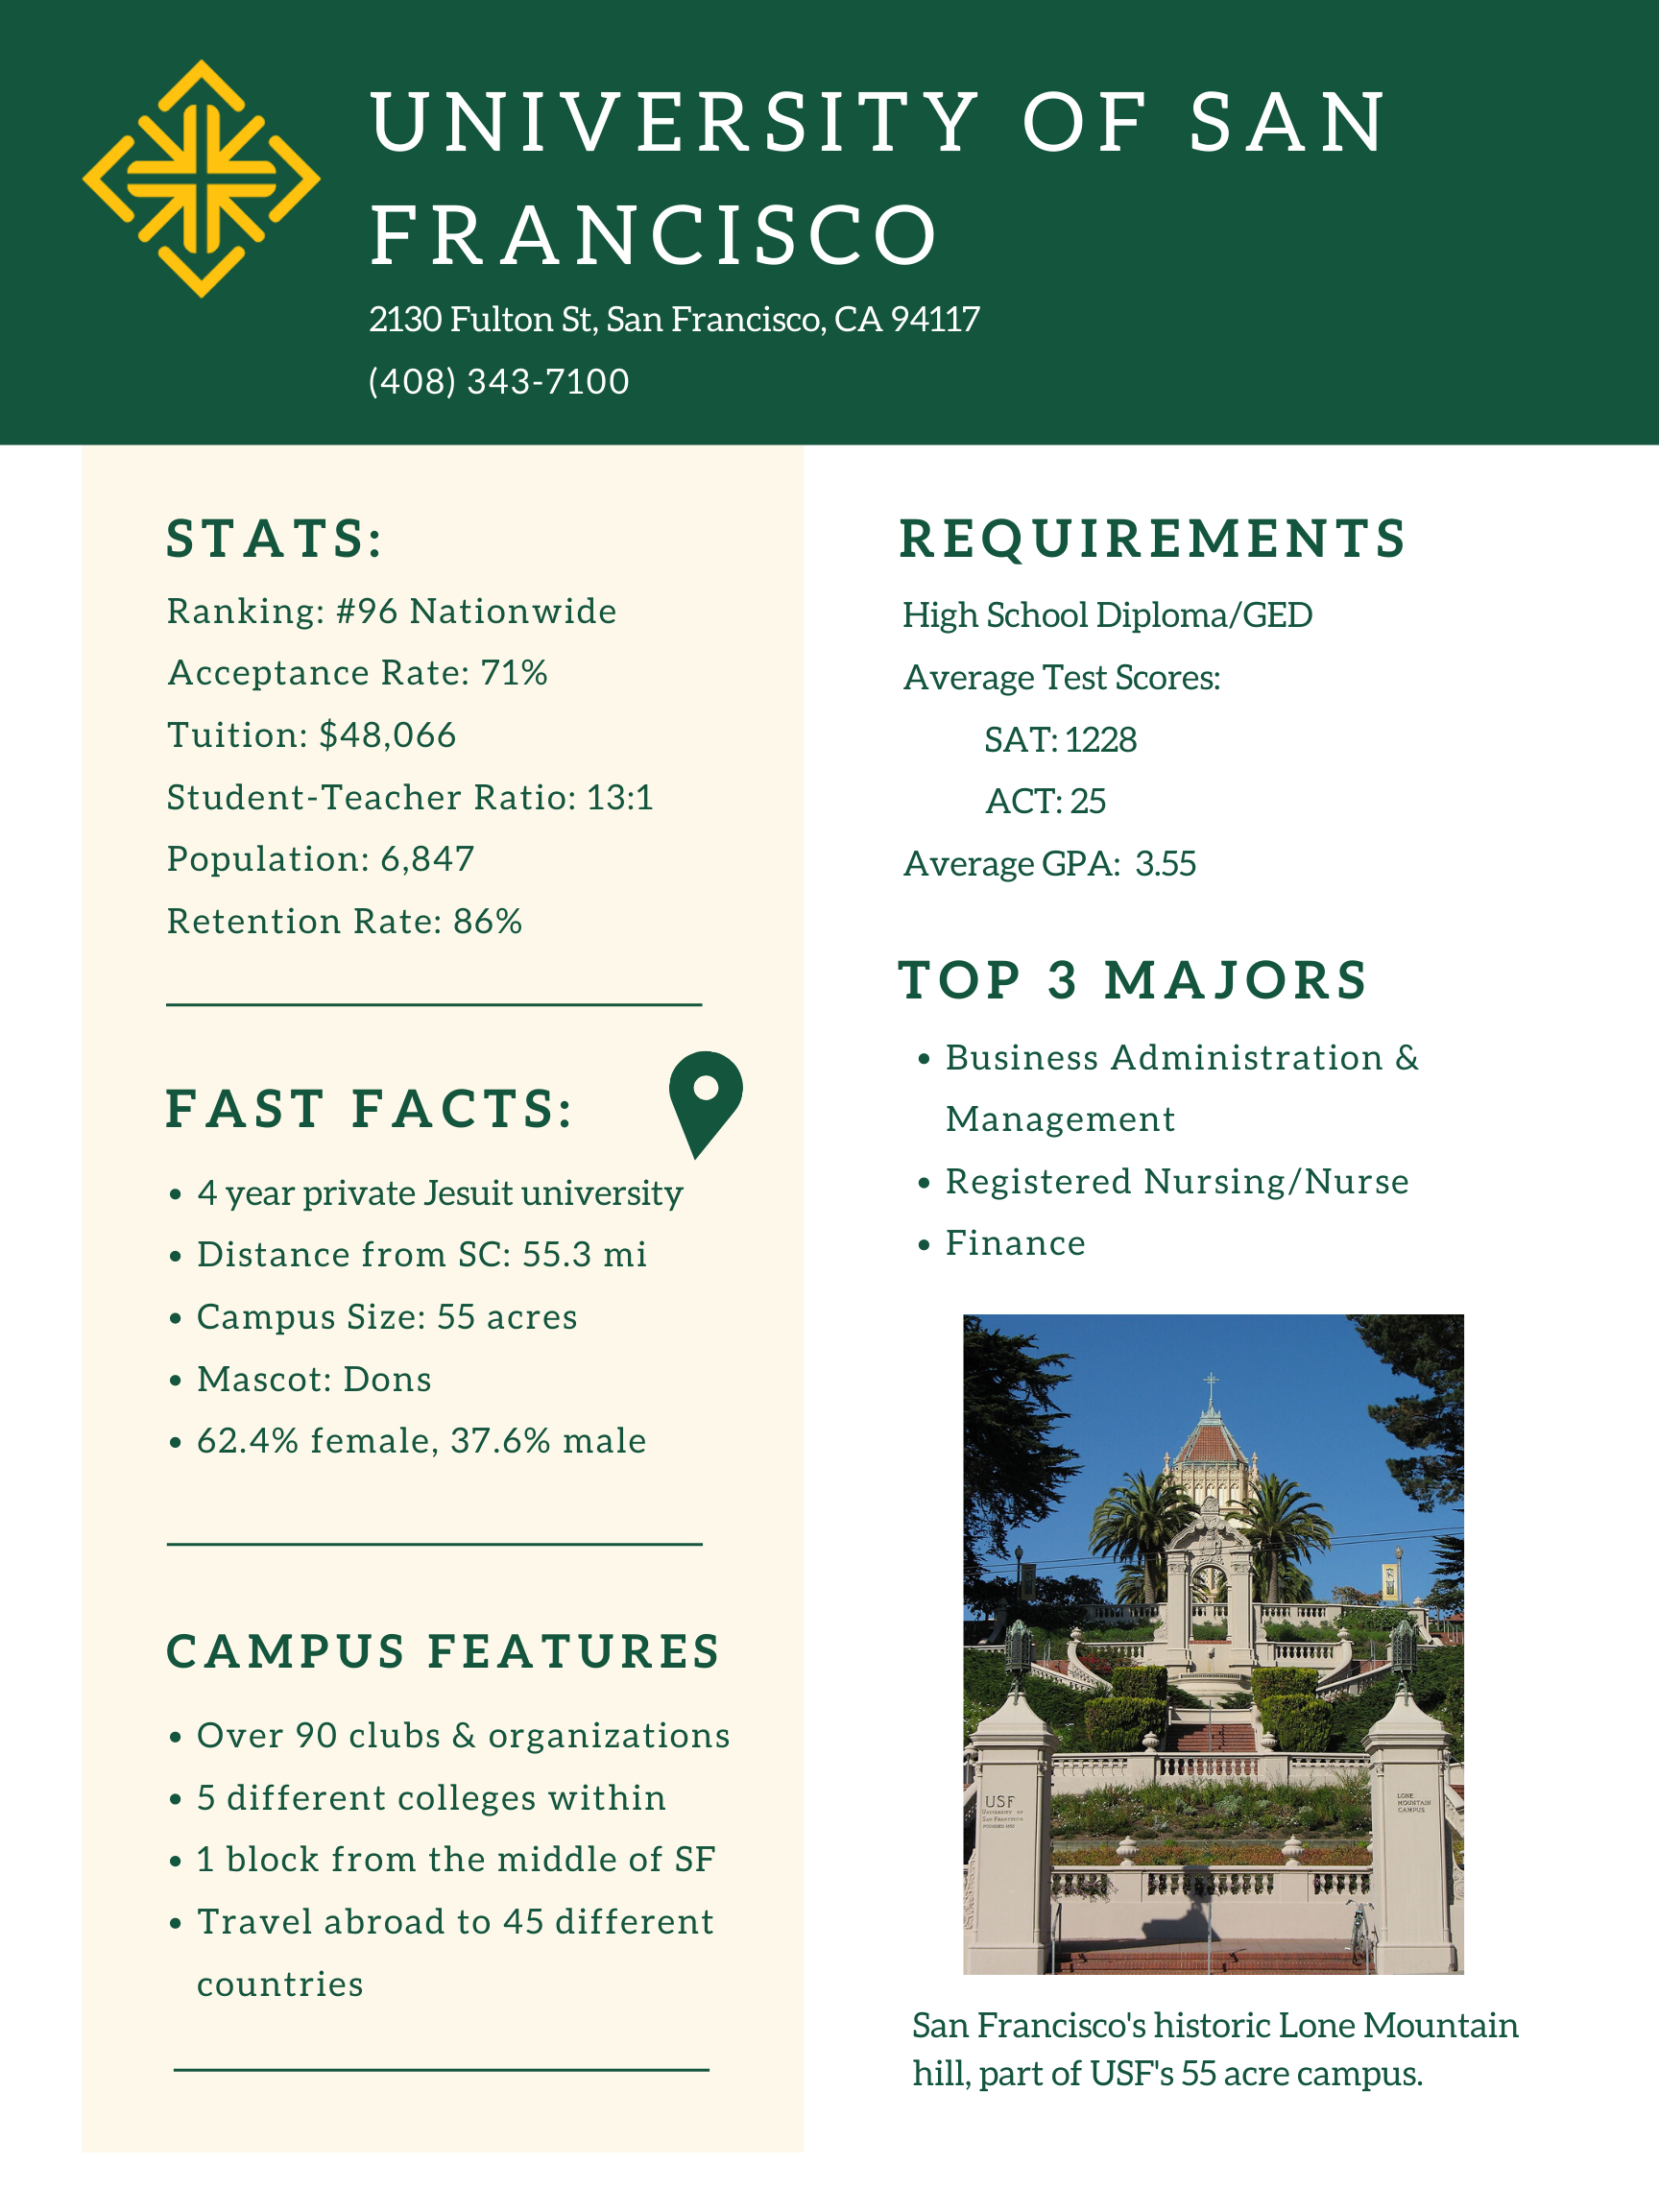 infographic on University of San Francisco